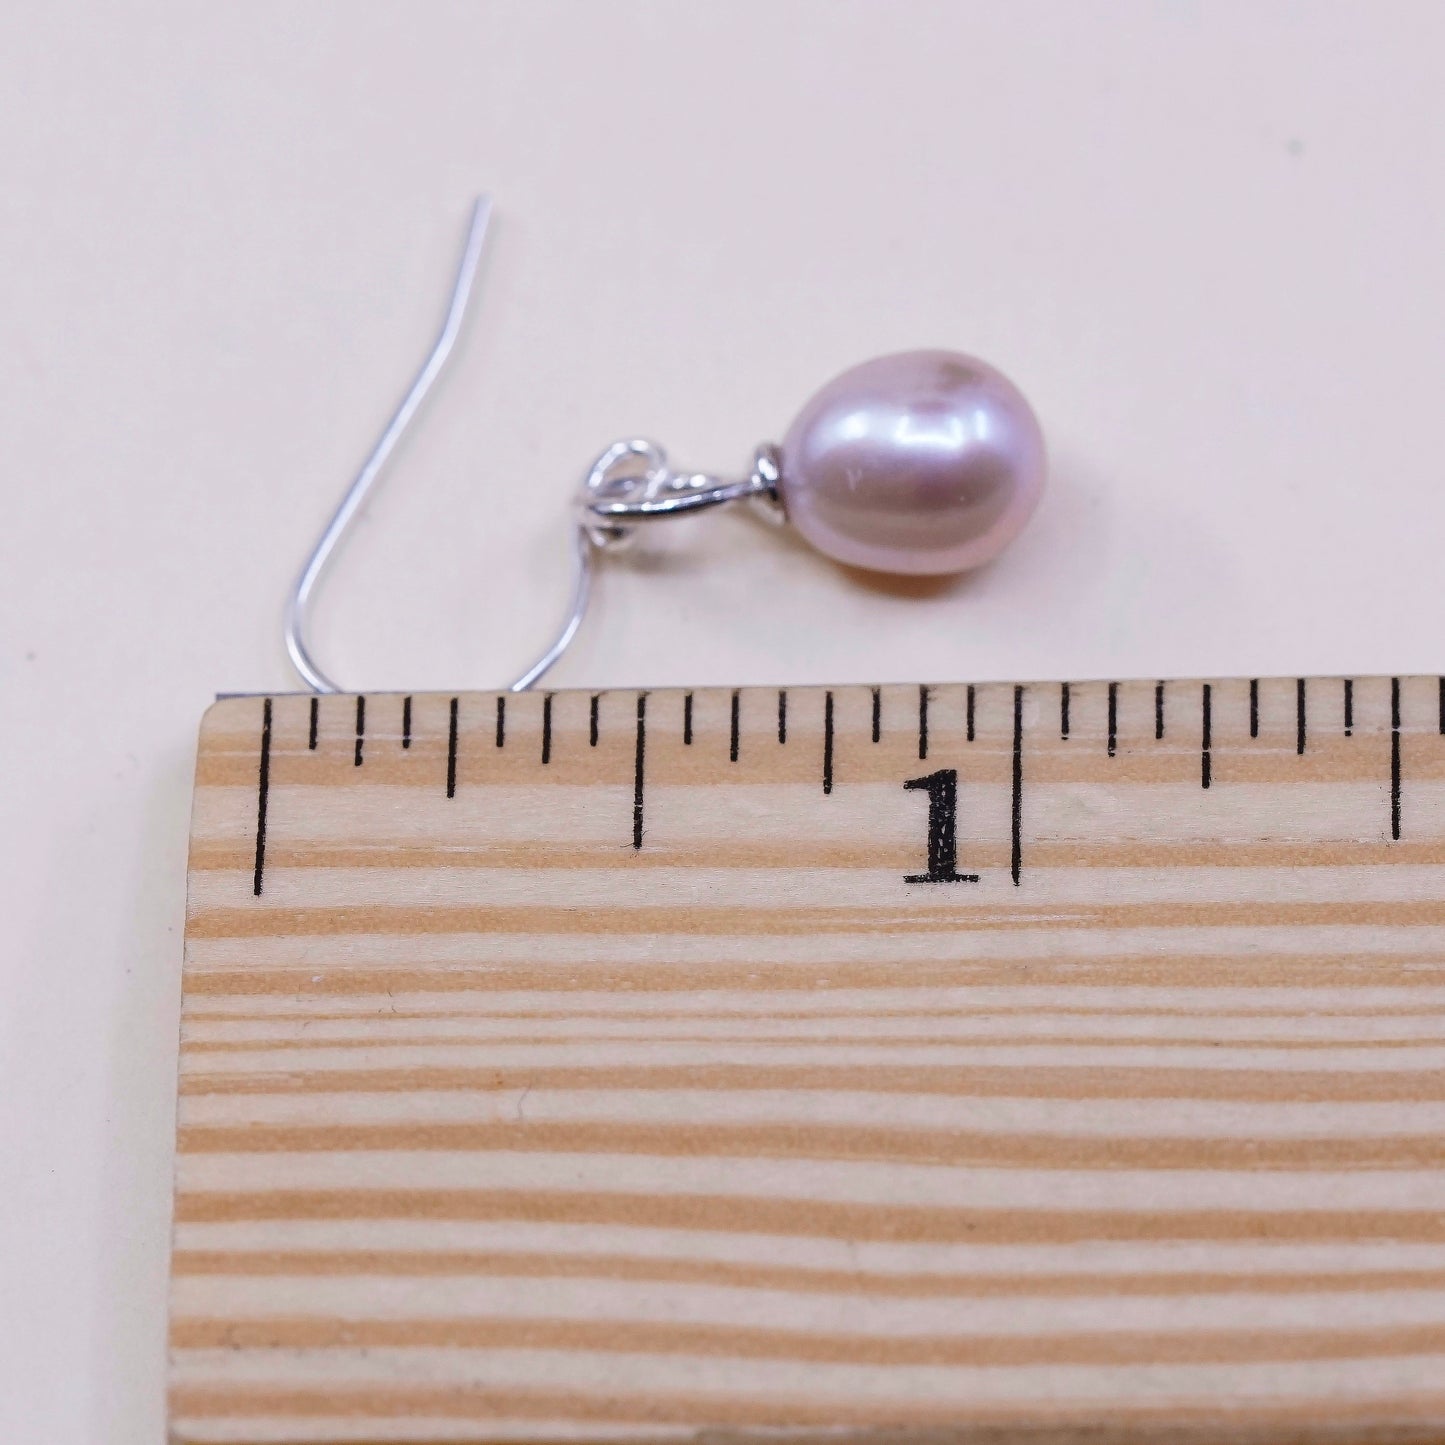 Sterling silver handmade earrings, 925 w/ oval freshwater pearl, silver tested